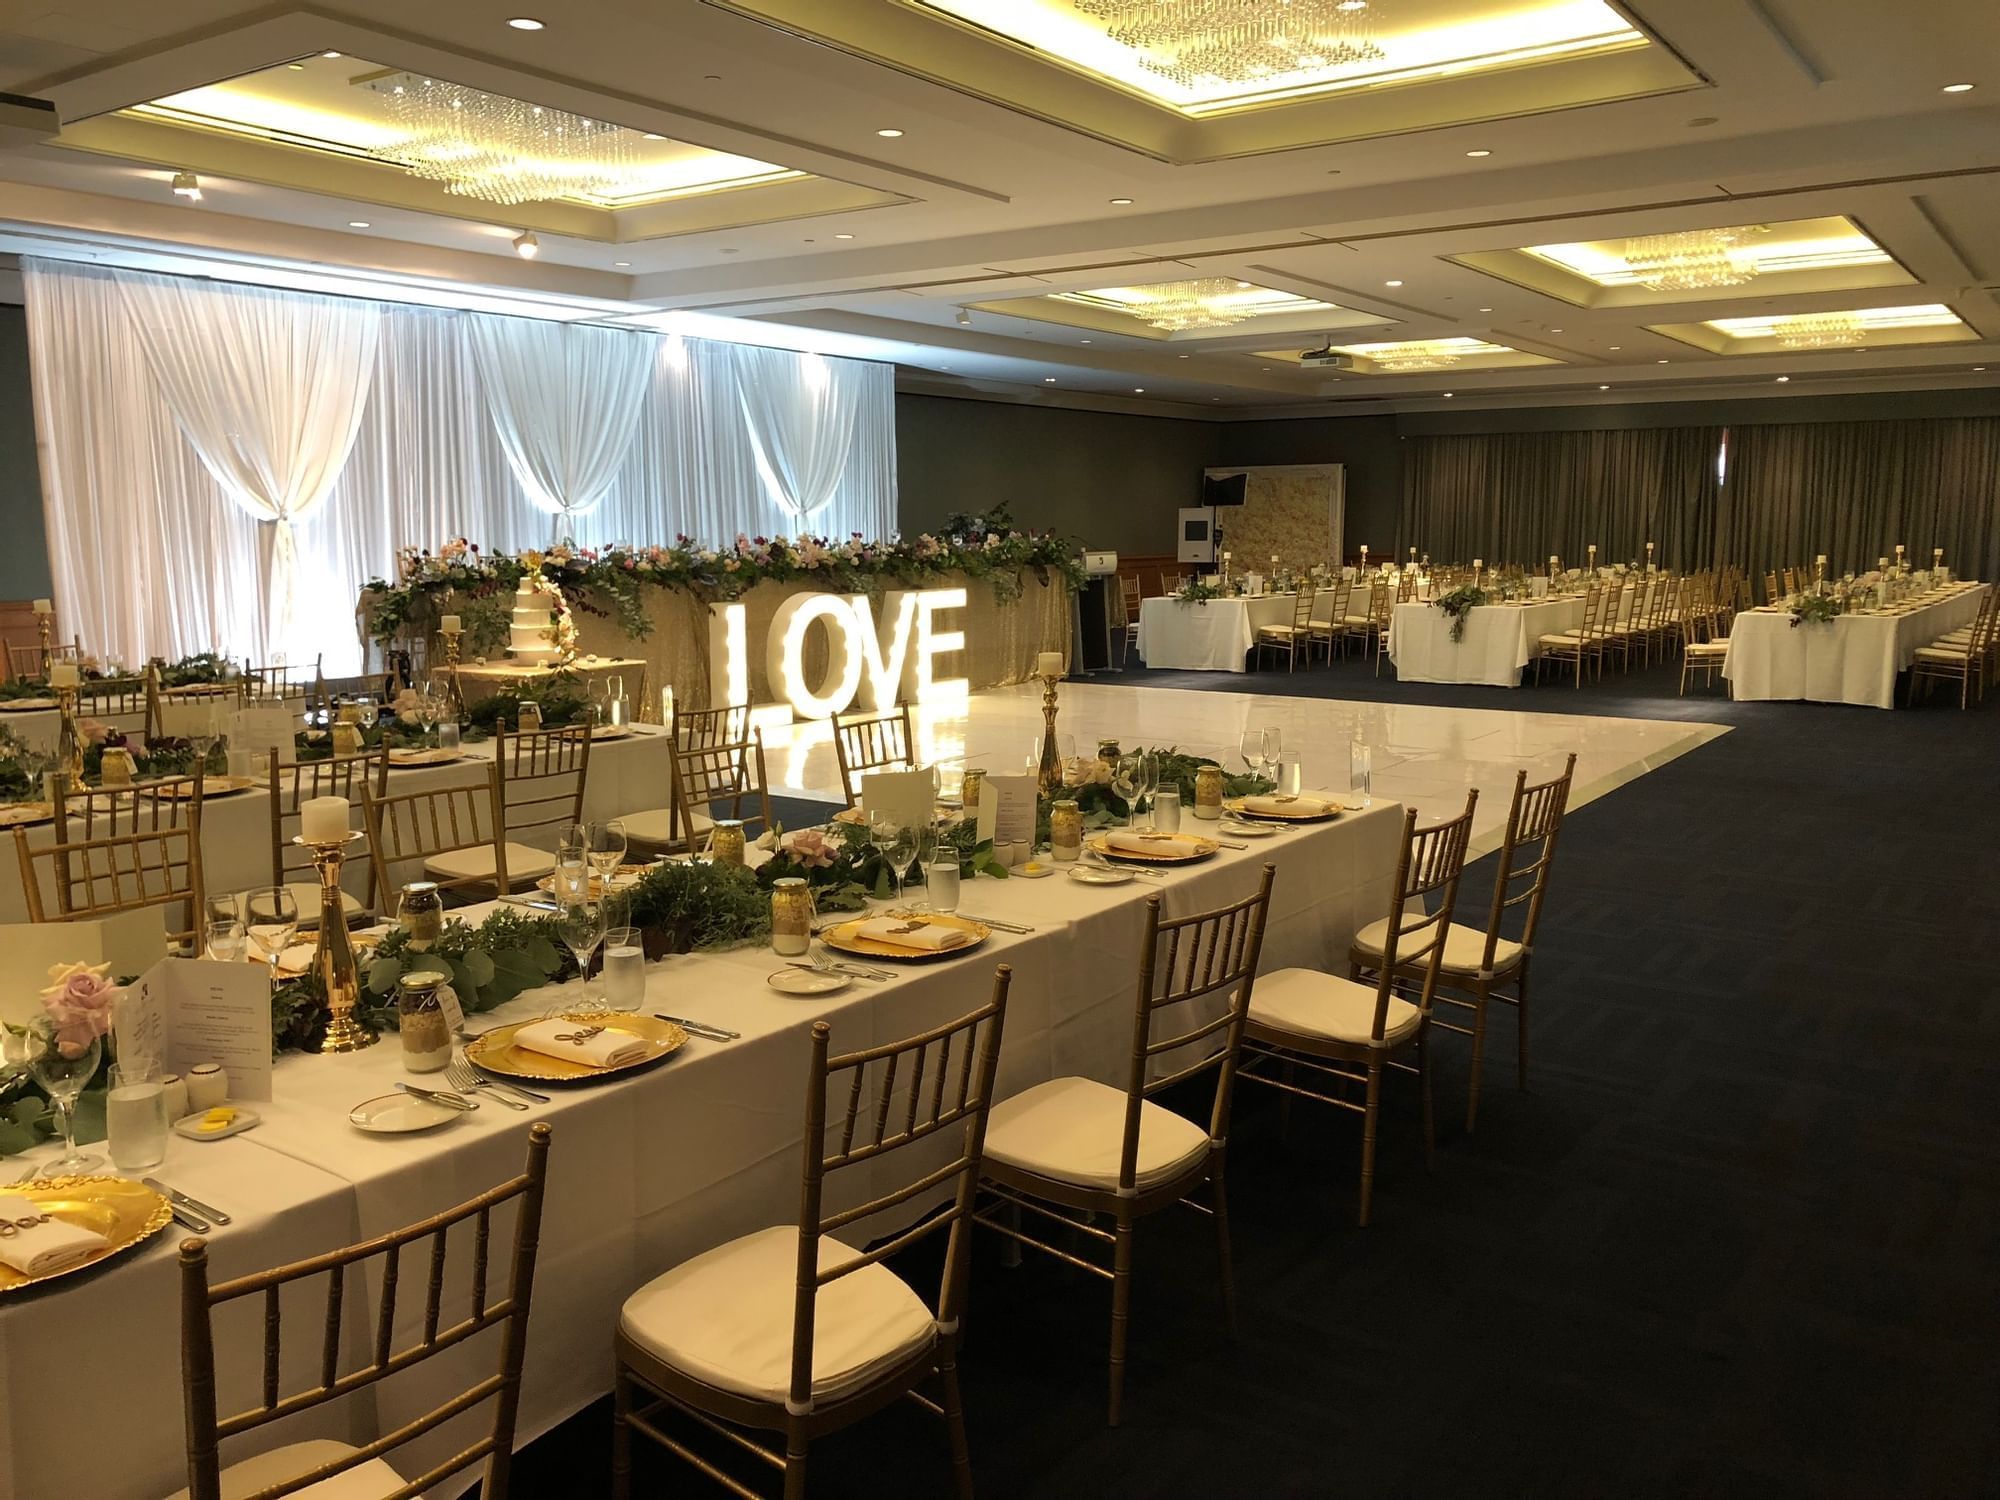 Ballroom wedding reception with love sign at Duxton Hotel Perth